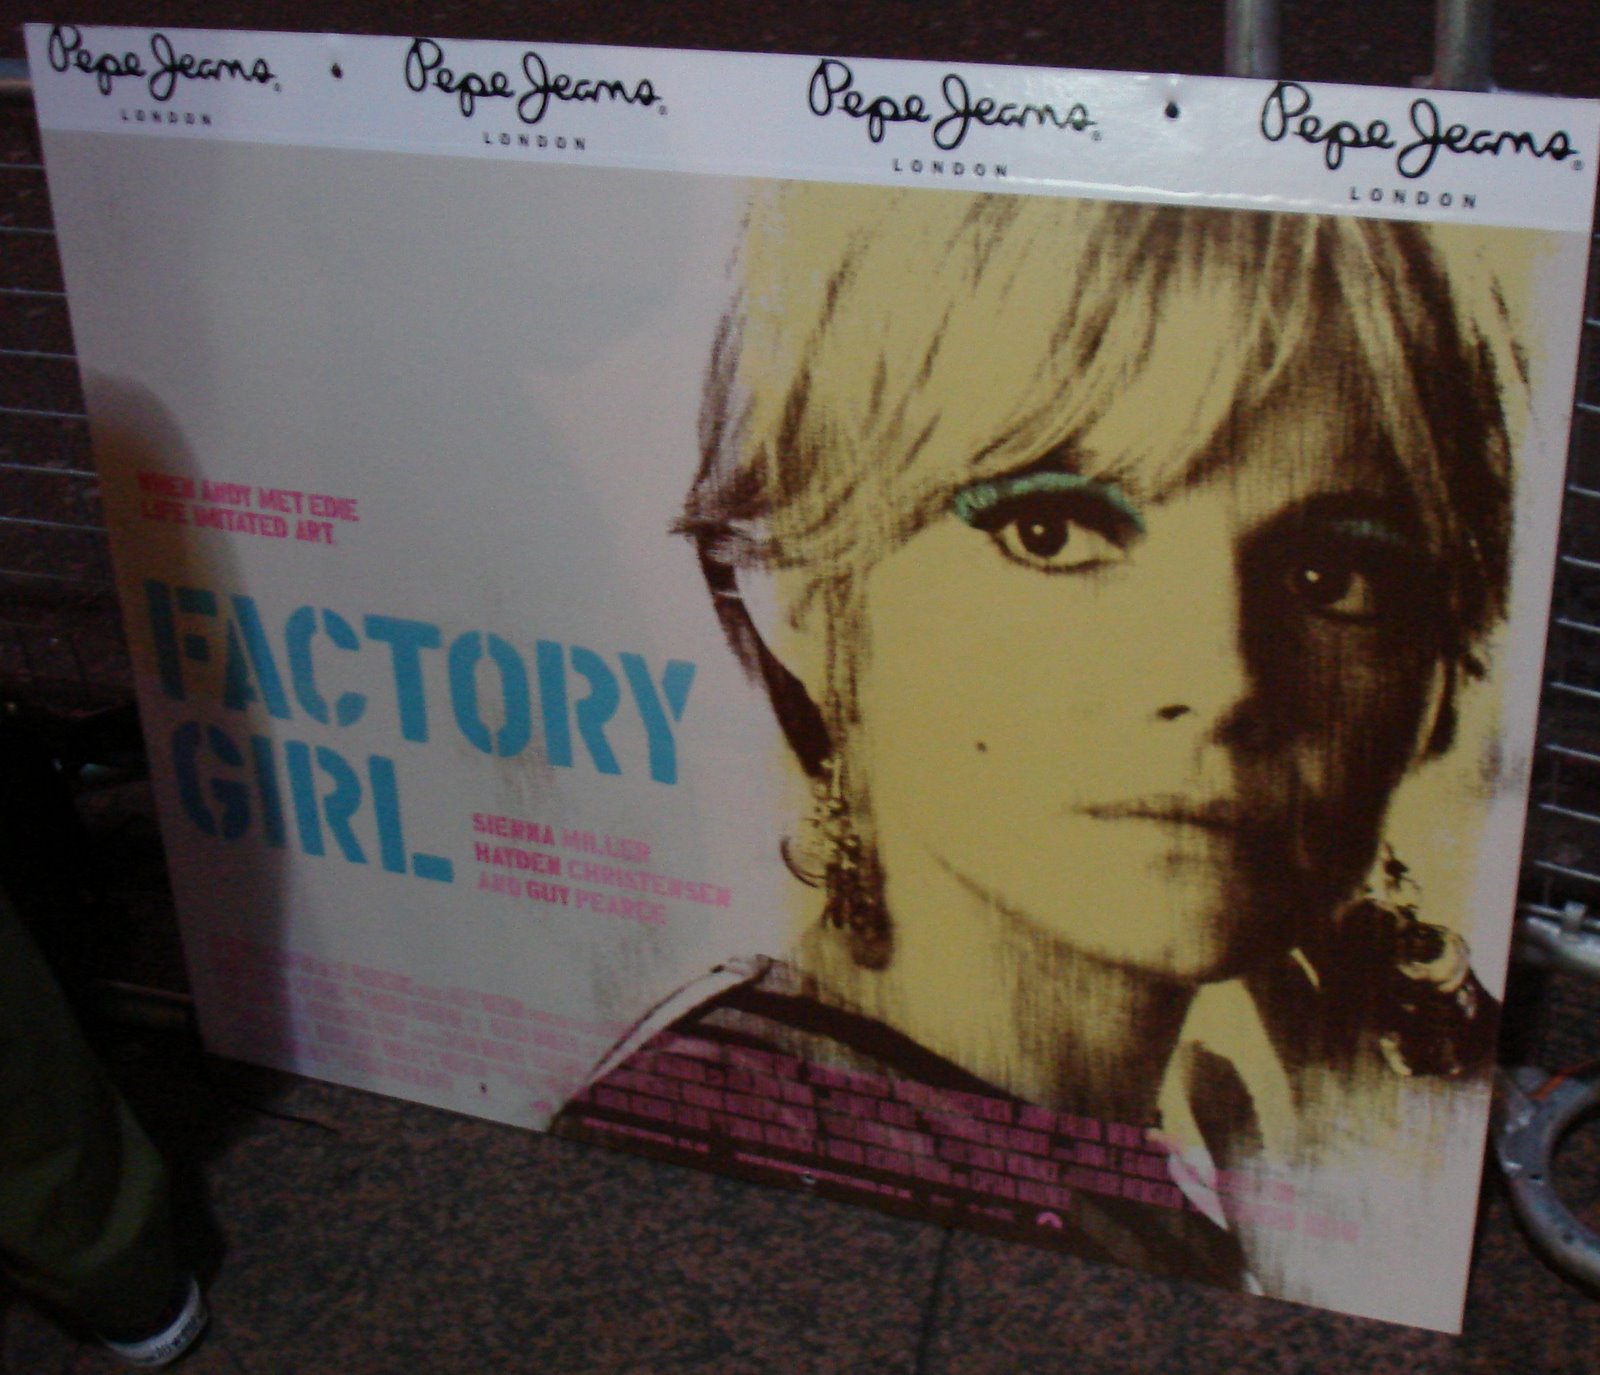 [Factory+Girl+premiere.jpg]